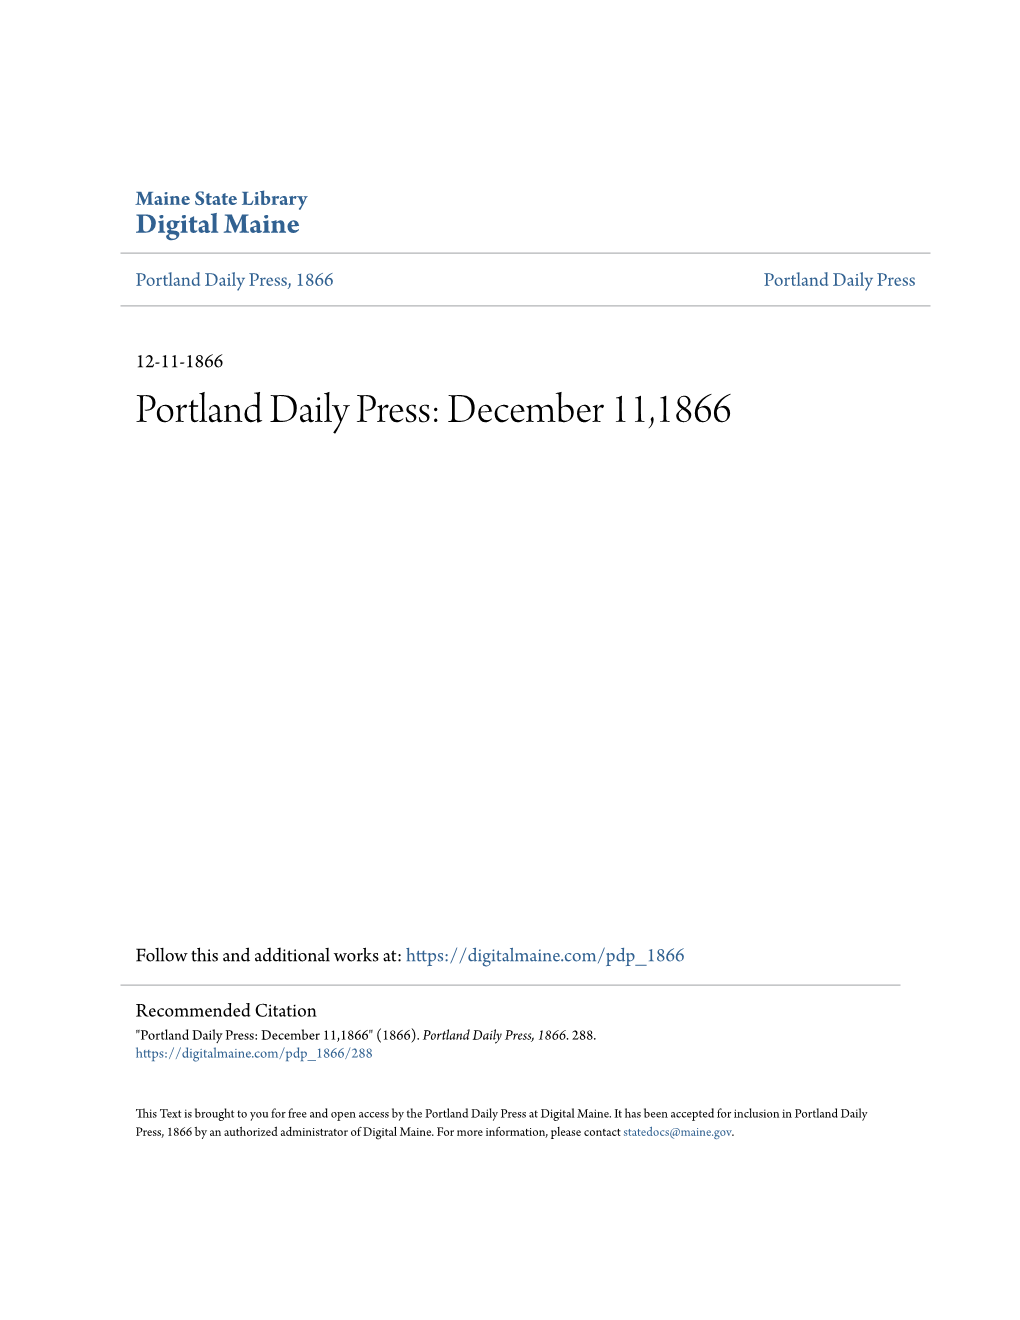 Portland Daily Press: December 11,1866